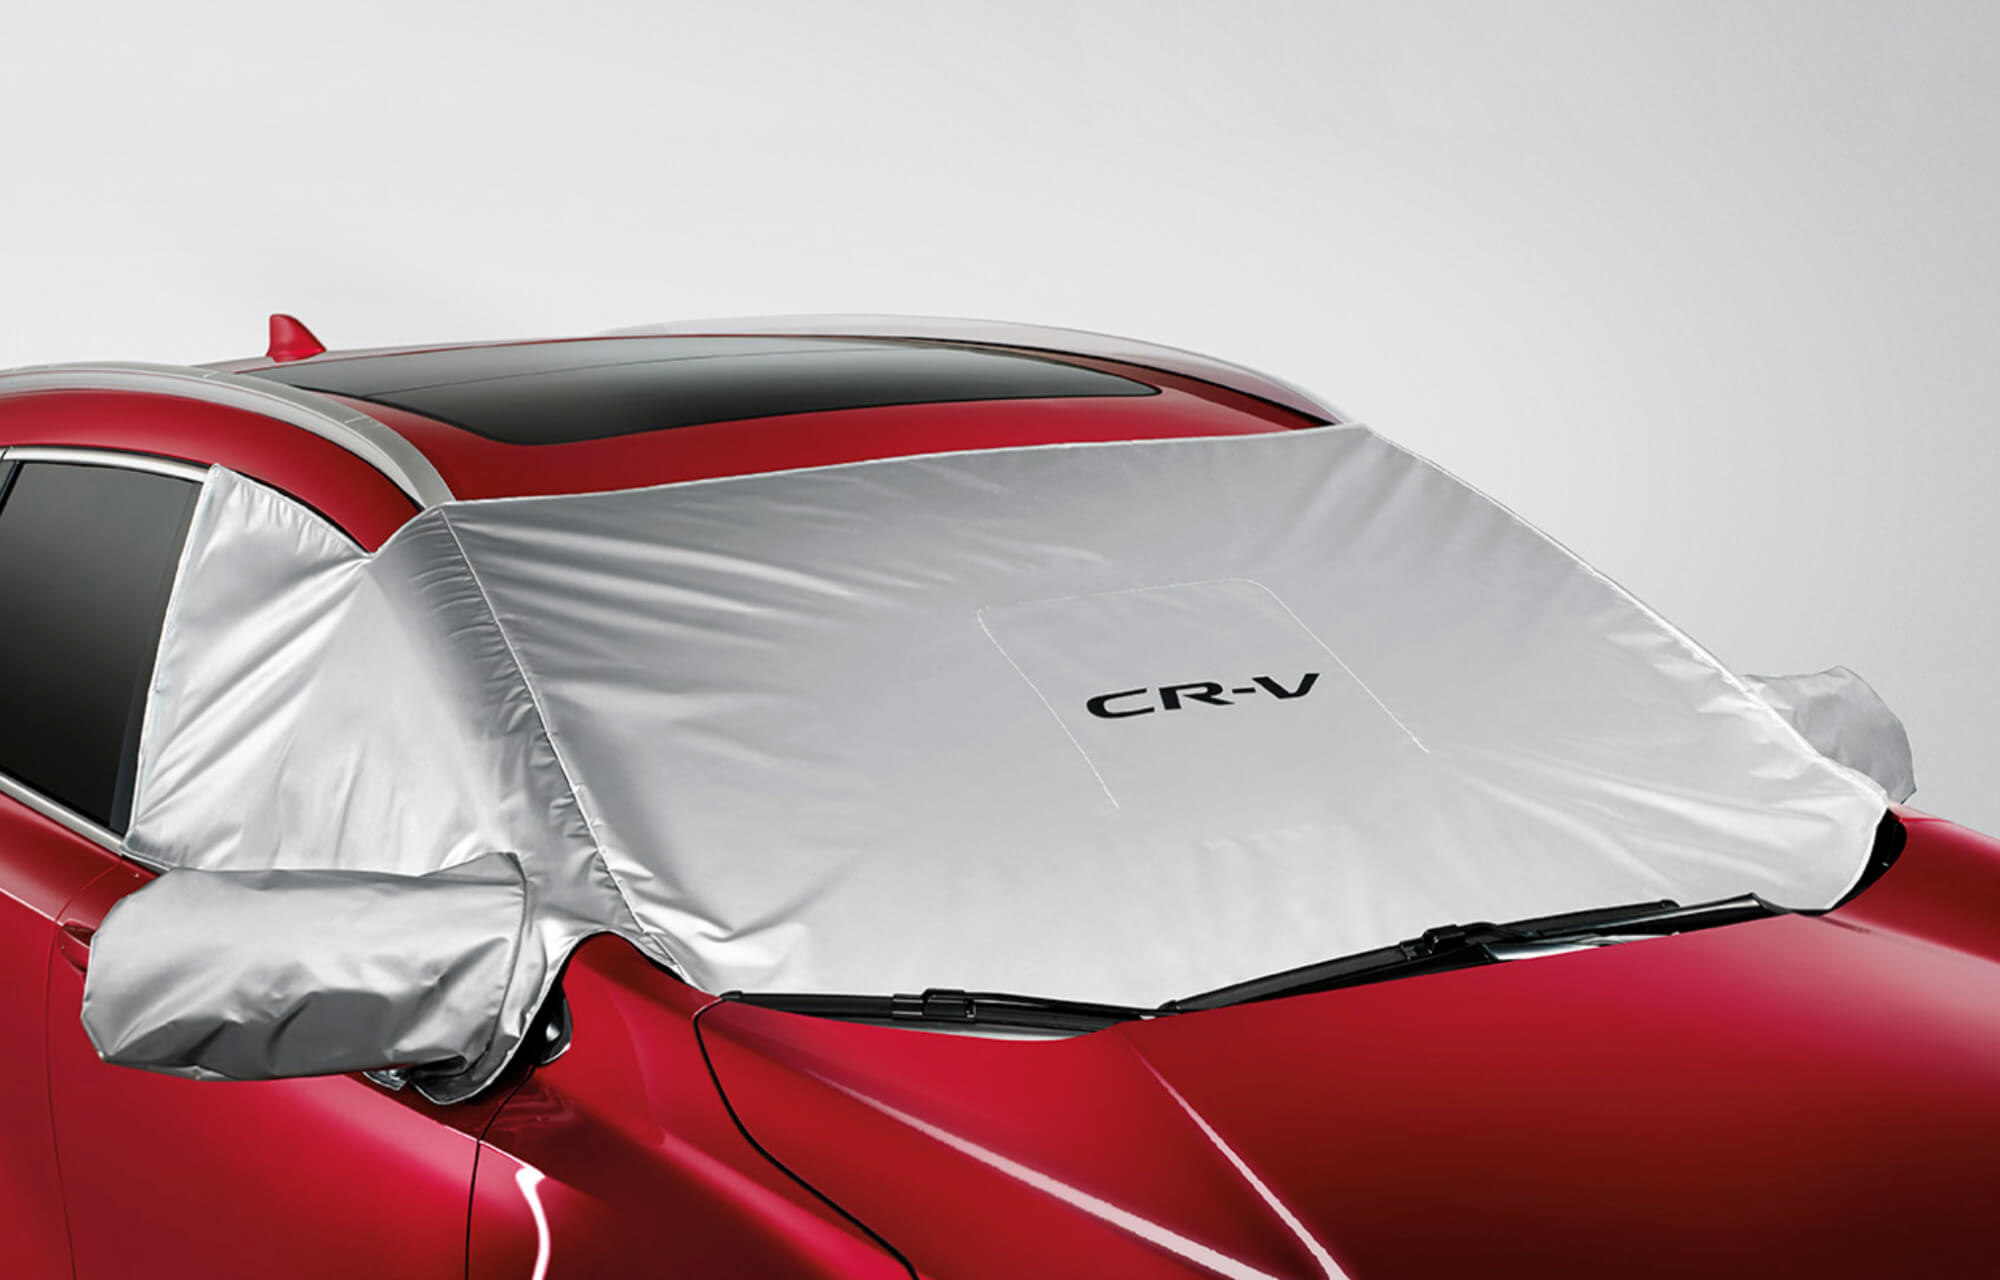 CR-V Windshield Cover